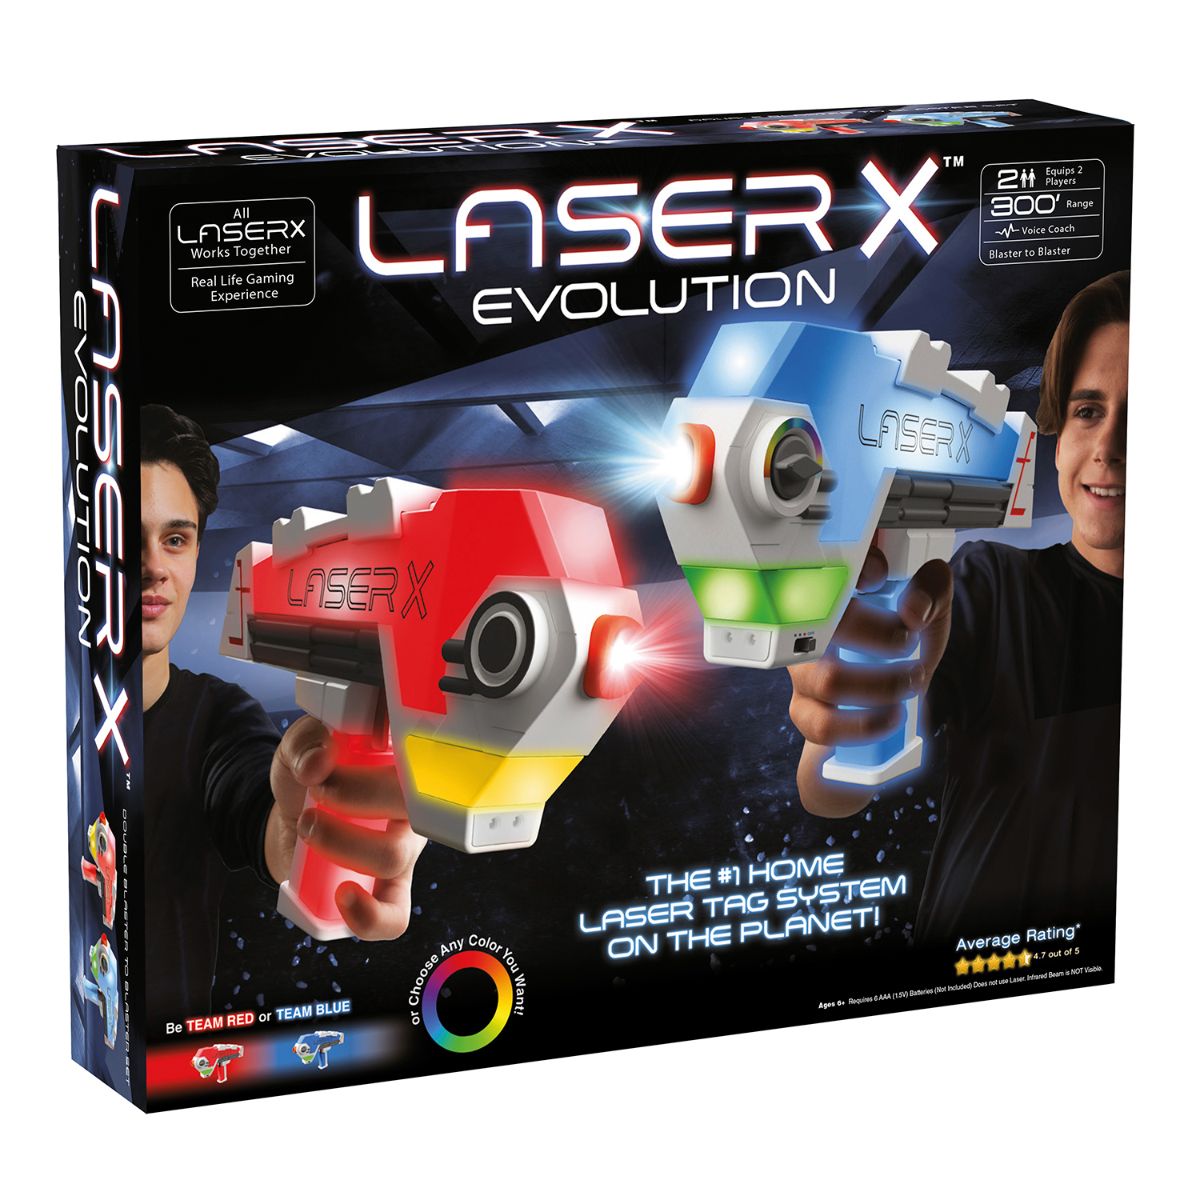 Set Blaster Dubble, Laser X Evolution, B2 Laser X